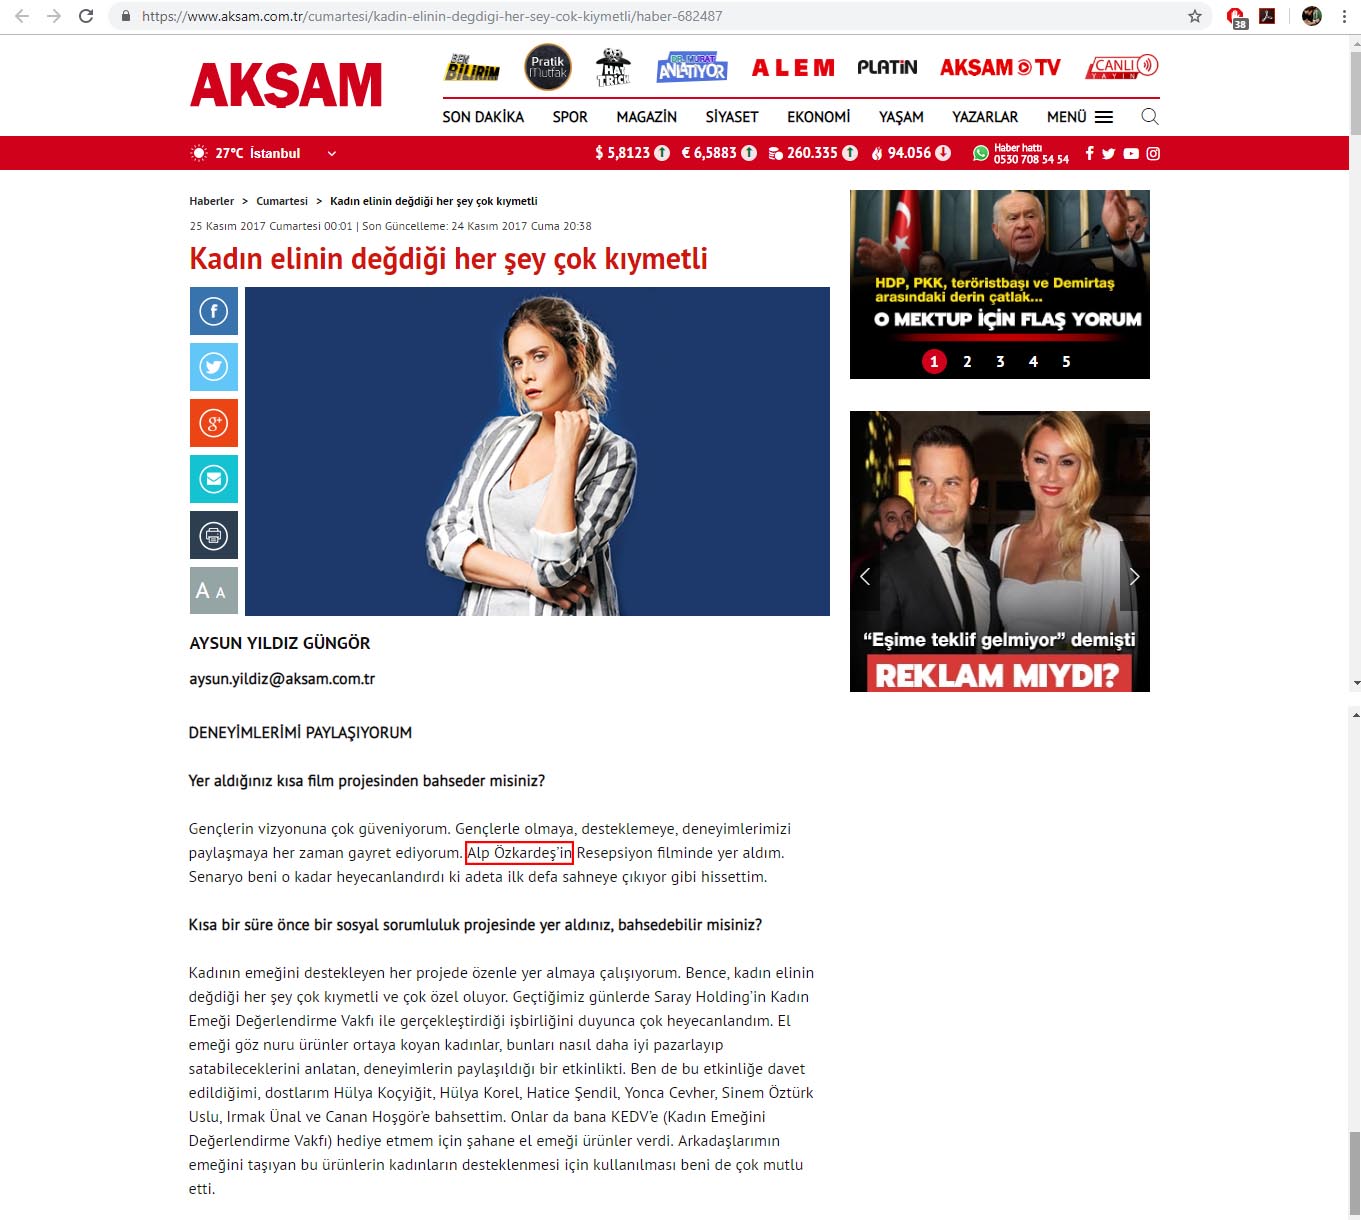 aksam.com.tr haberi.